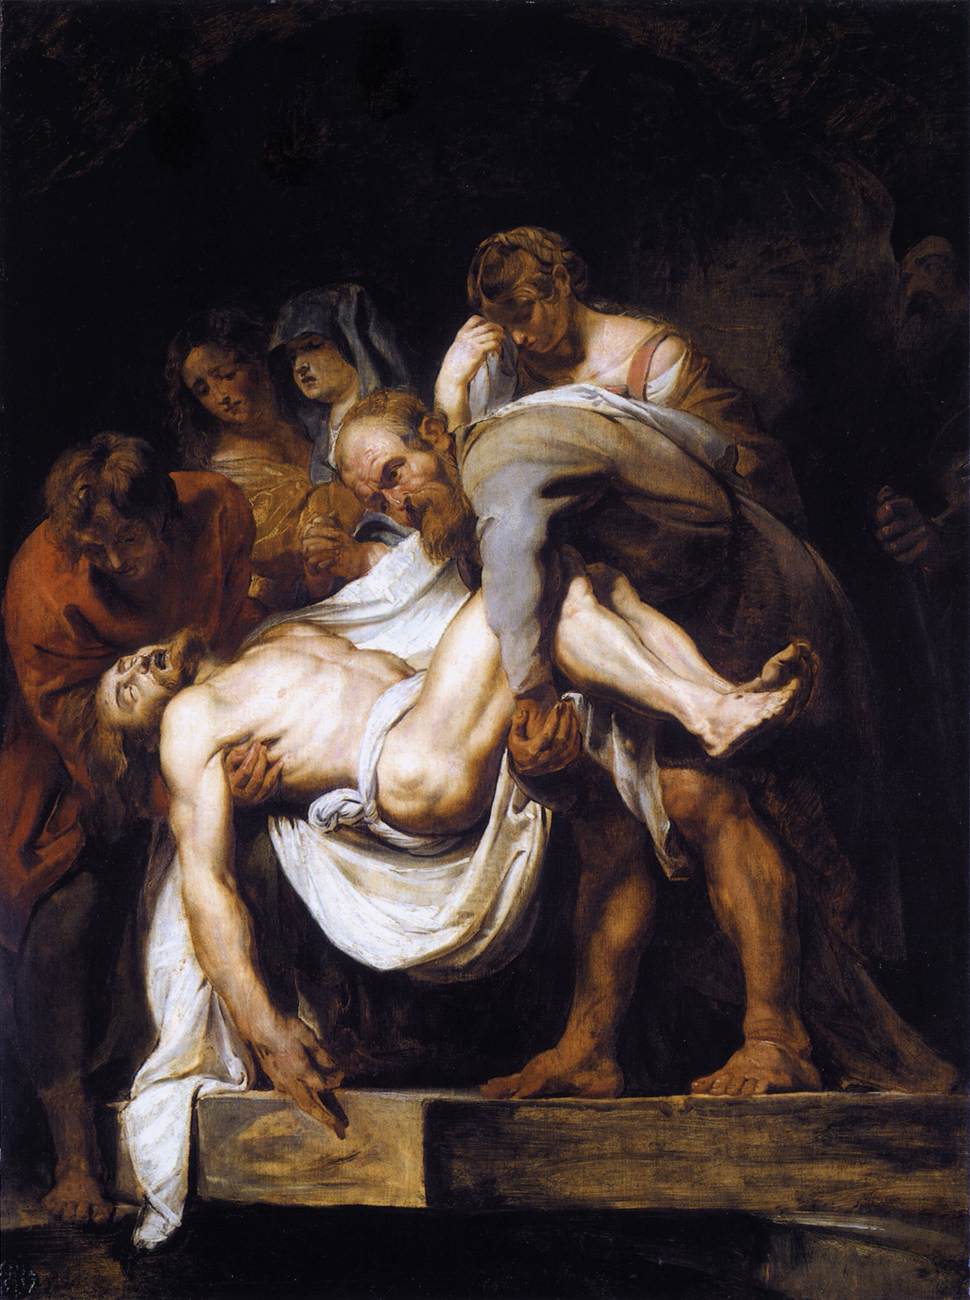 Питер Пауль Рубенс. "Снятие с креста". 1611-1612. Национальный музей Канады, Оттава.